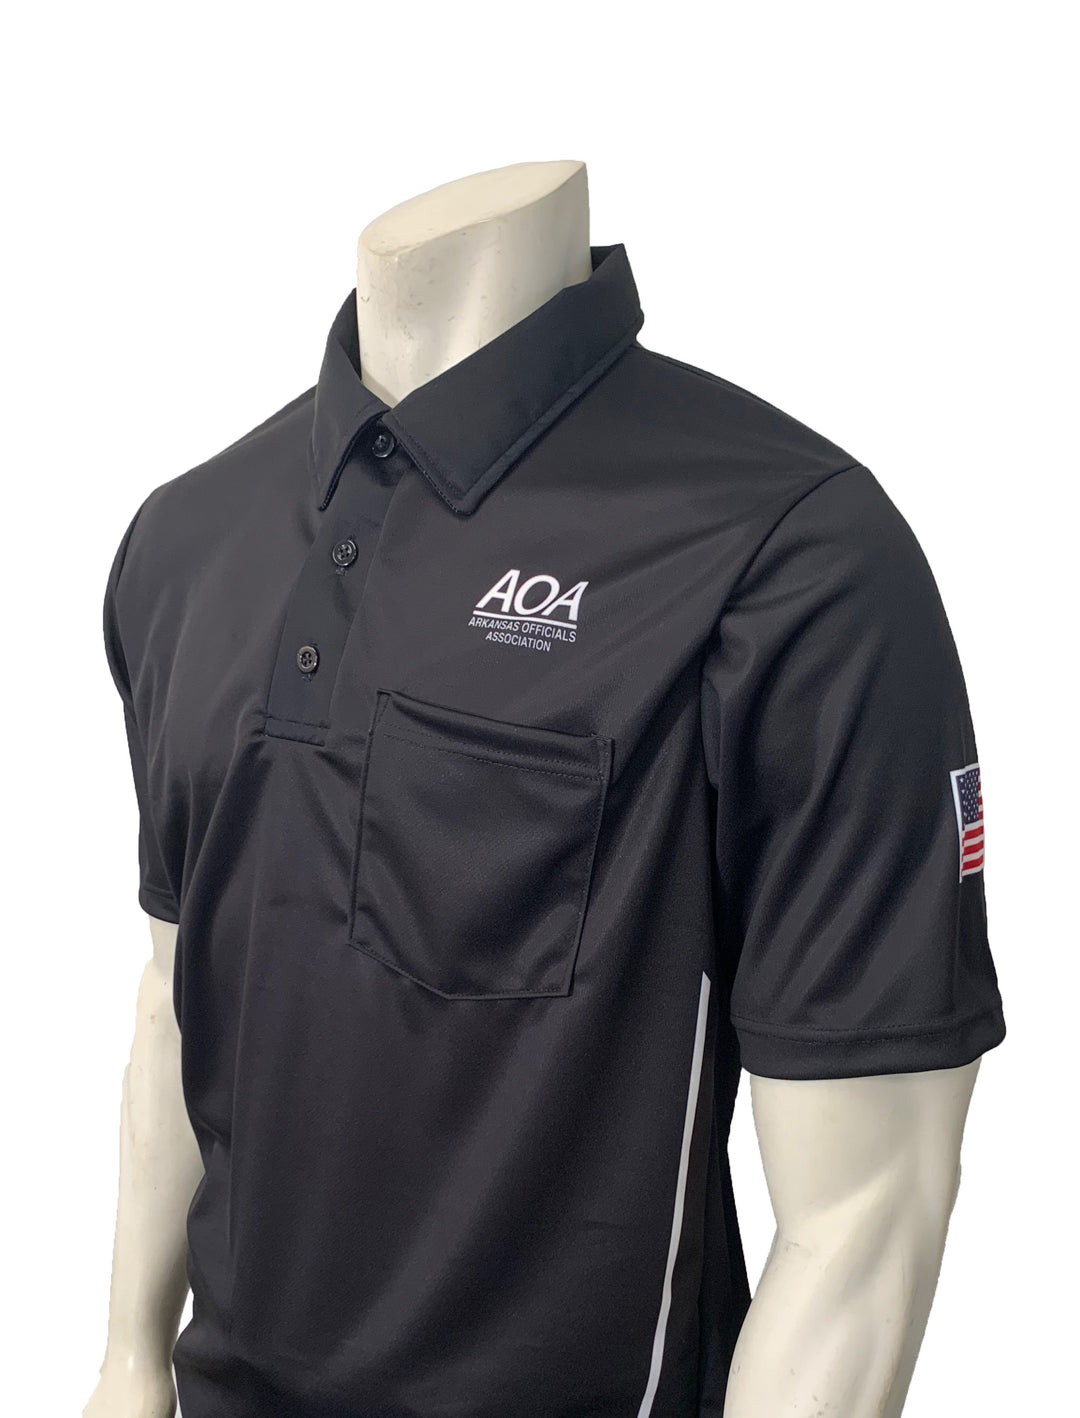 USA310AR-BK - Smitty "Made in USA" - "AOA" Short Sleeve Black Umpire Shirt